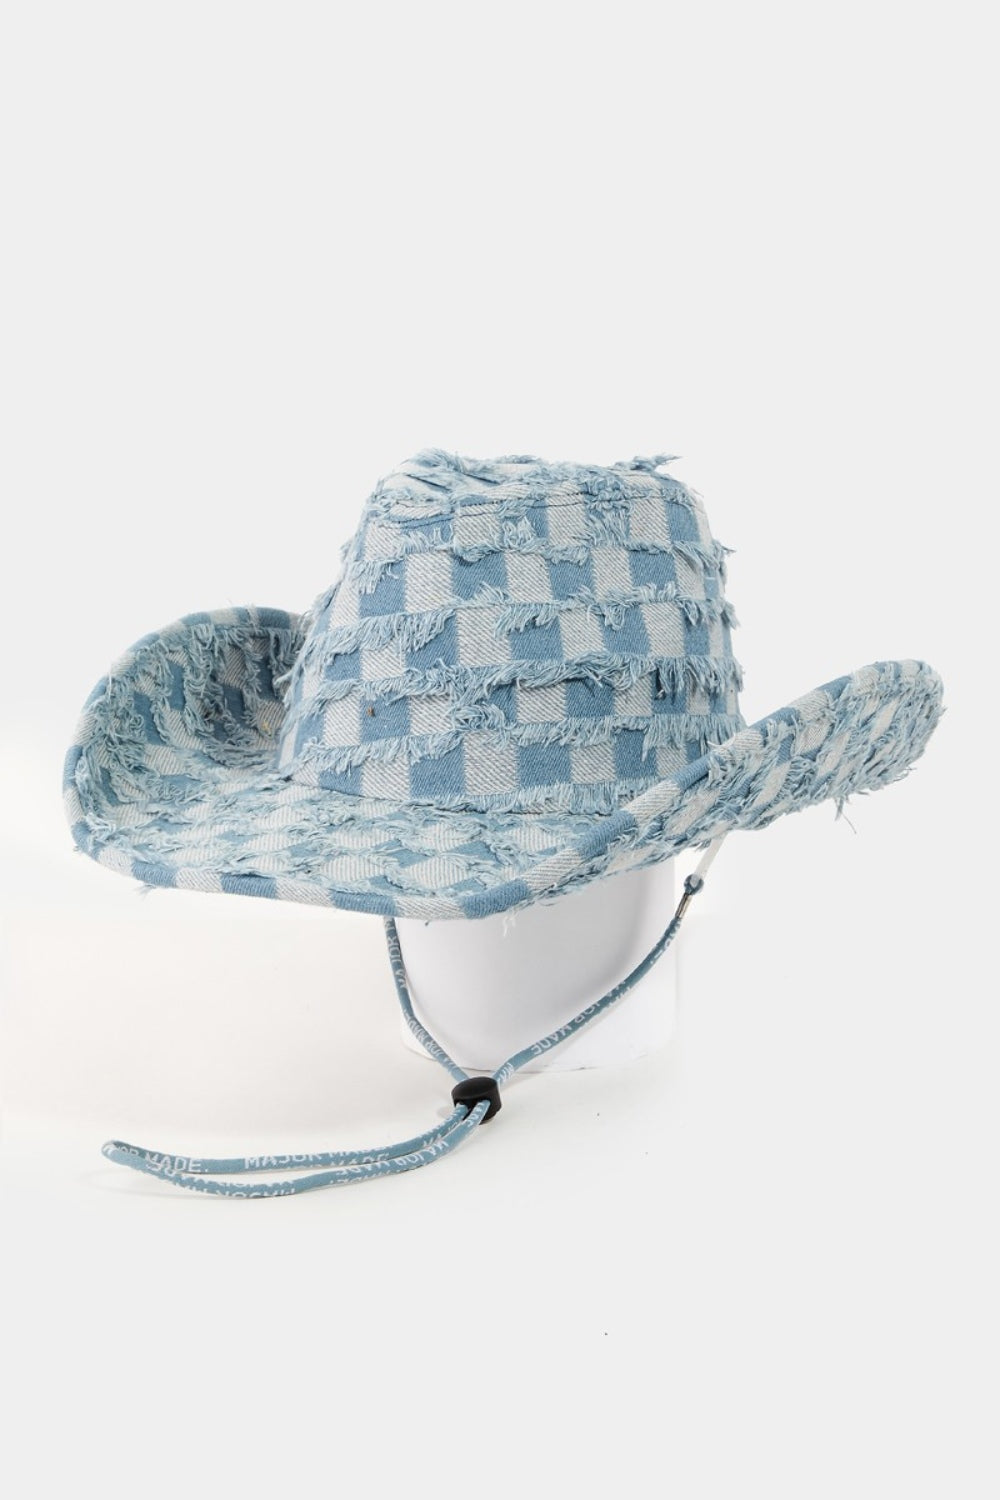 Fame Checkered Fringe Denim Cowboy Hat - Babbazon New Products